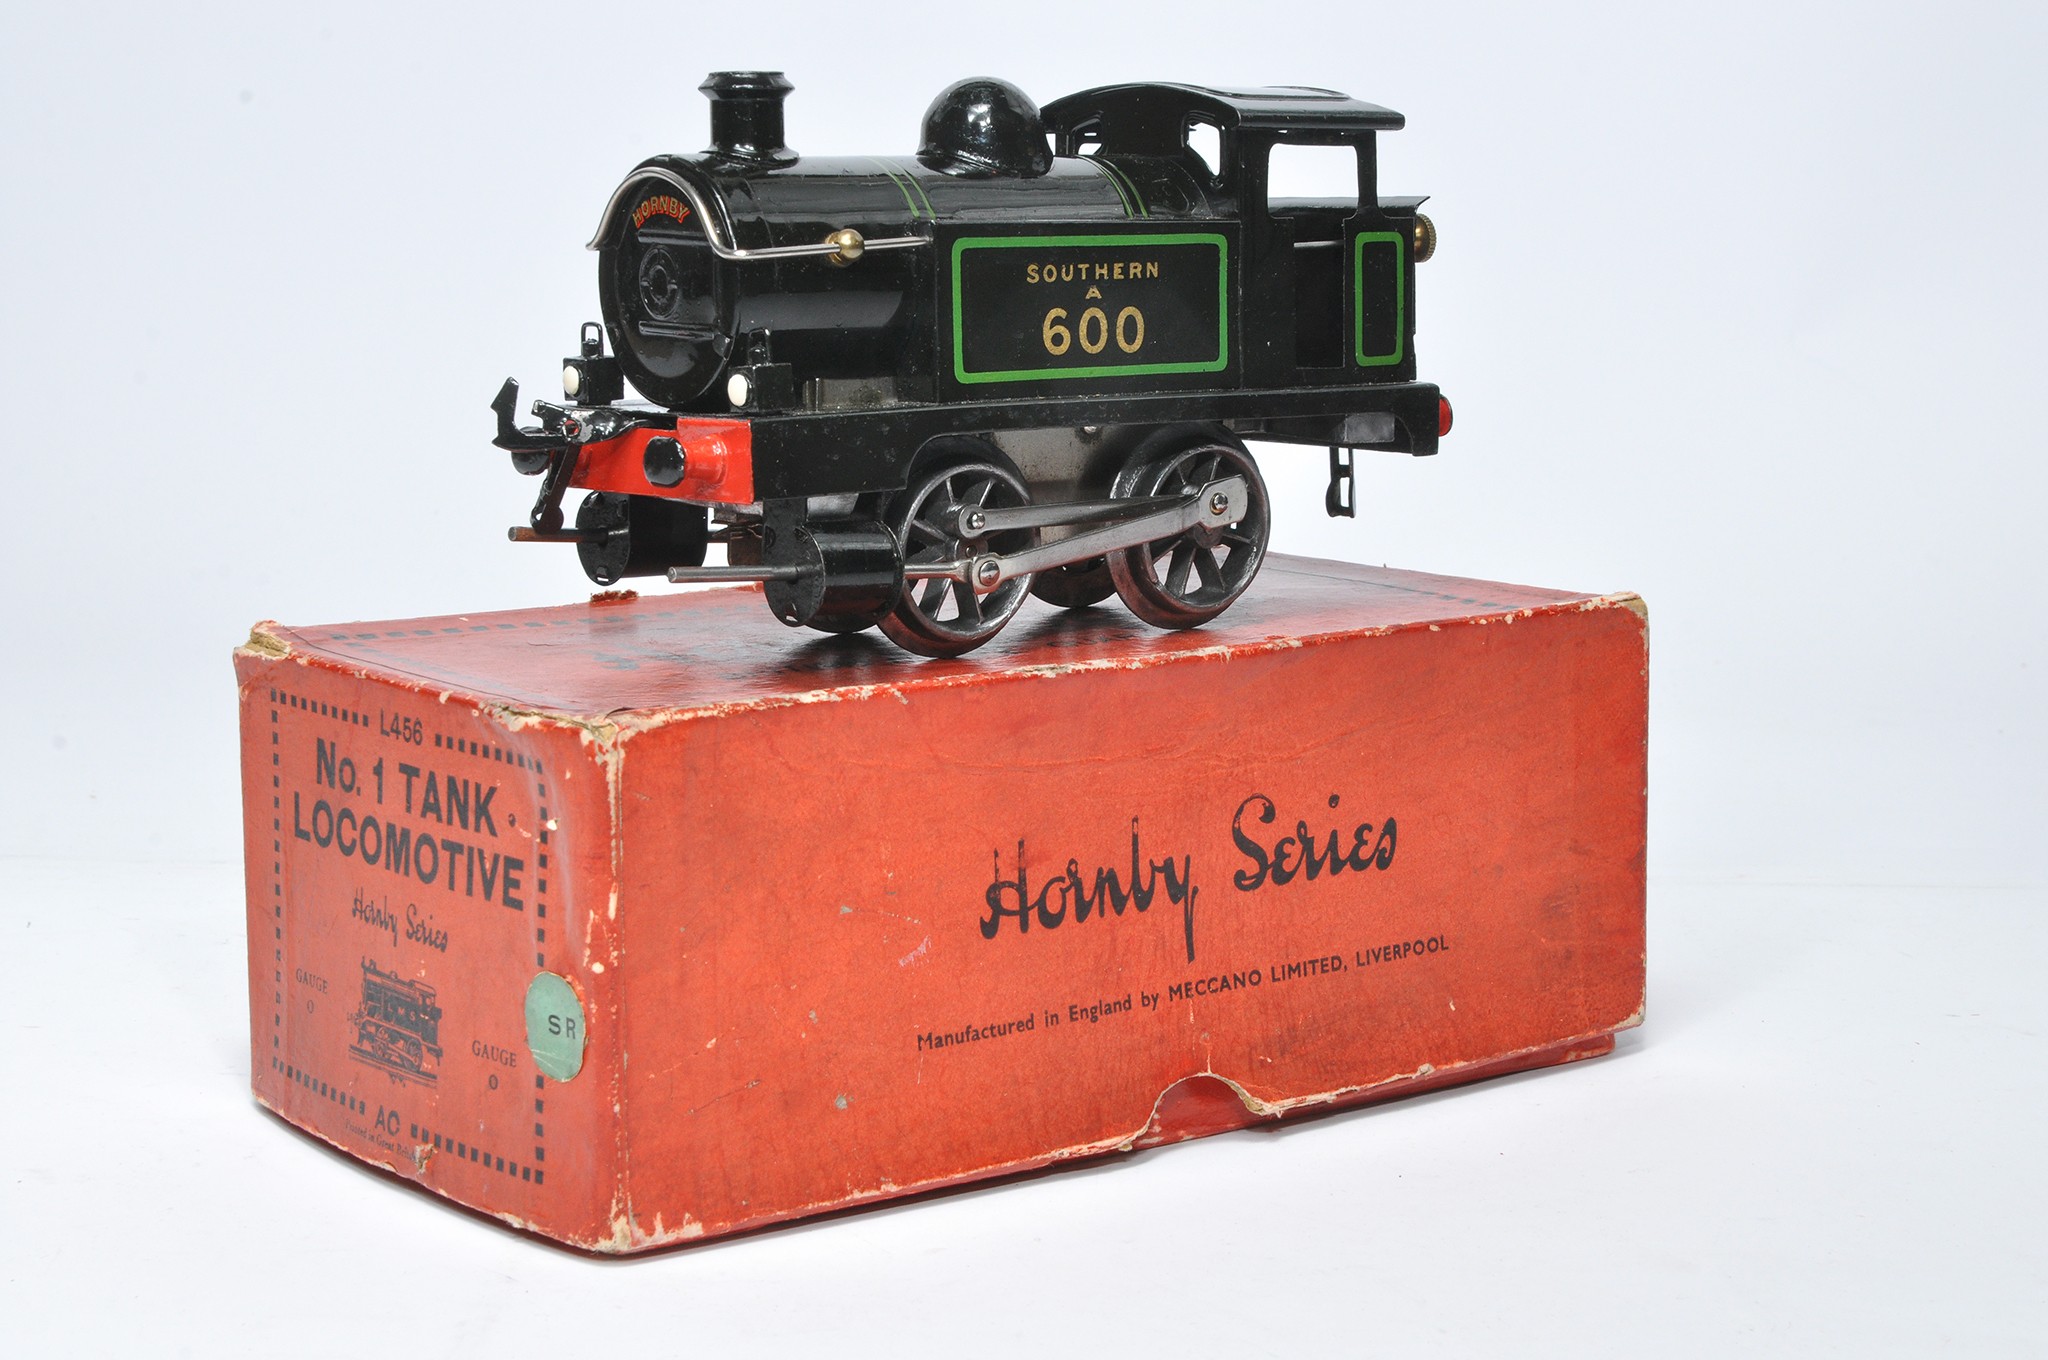 Hornby O Gauge Model Railway comprising No. 1 Tank Locomotive, Southern, No. 600. Displays generally